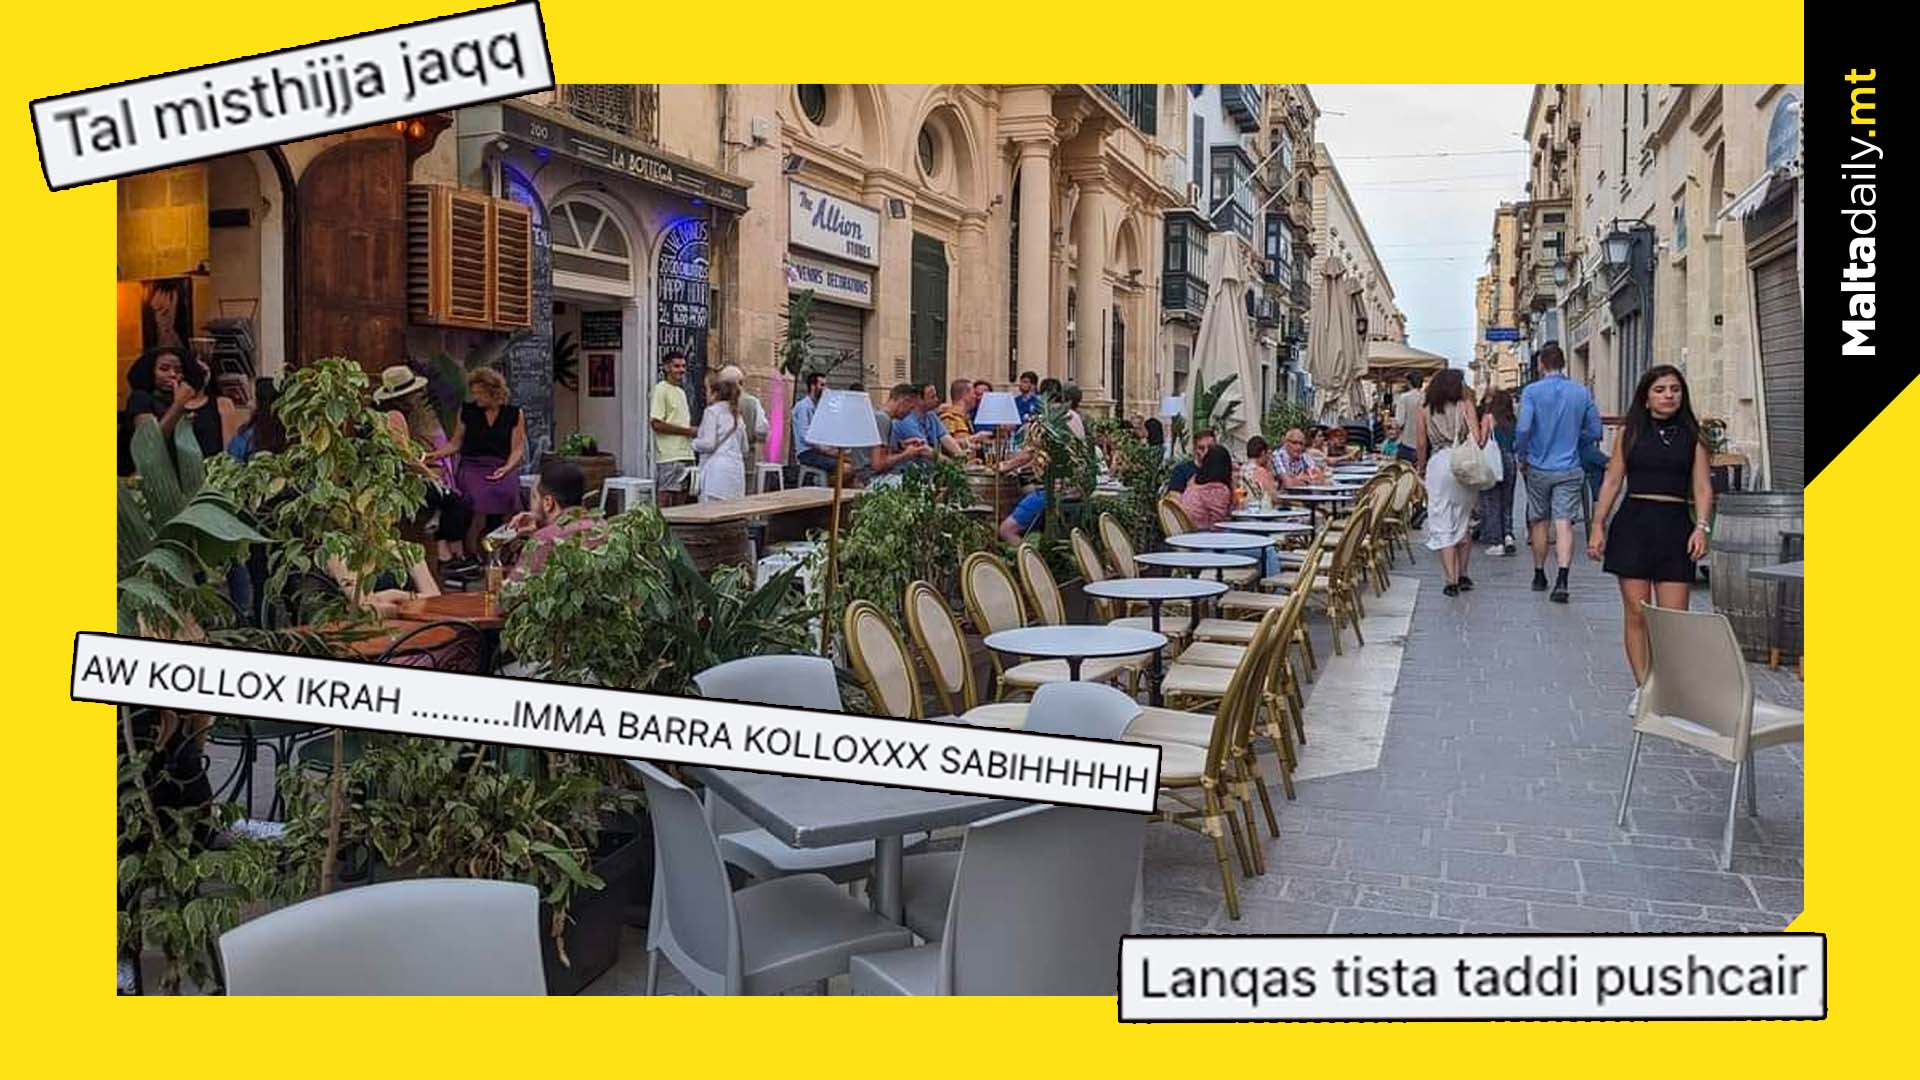 Tables & chairs in Valletta streets spark online debate